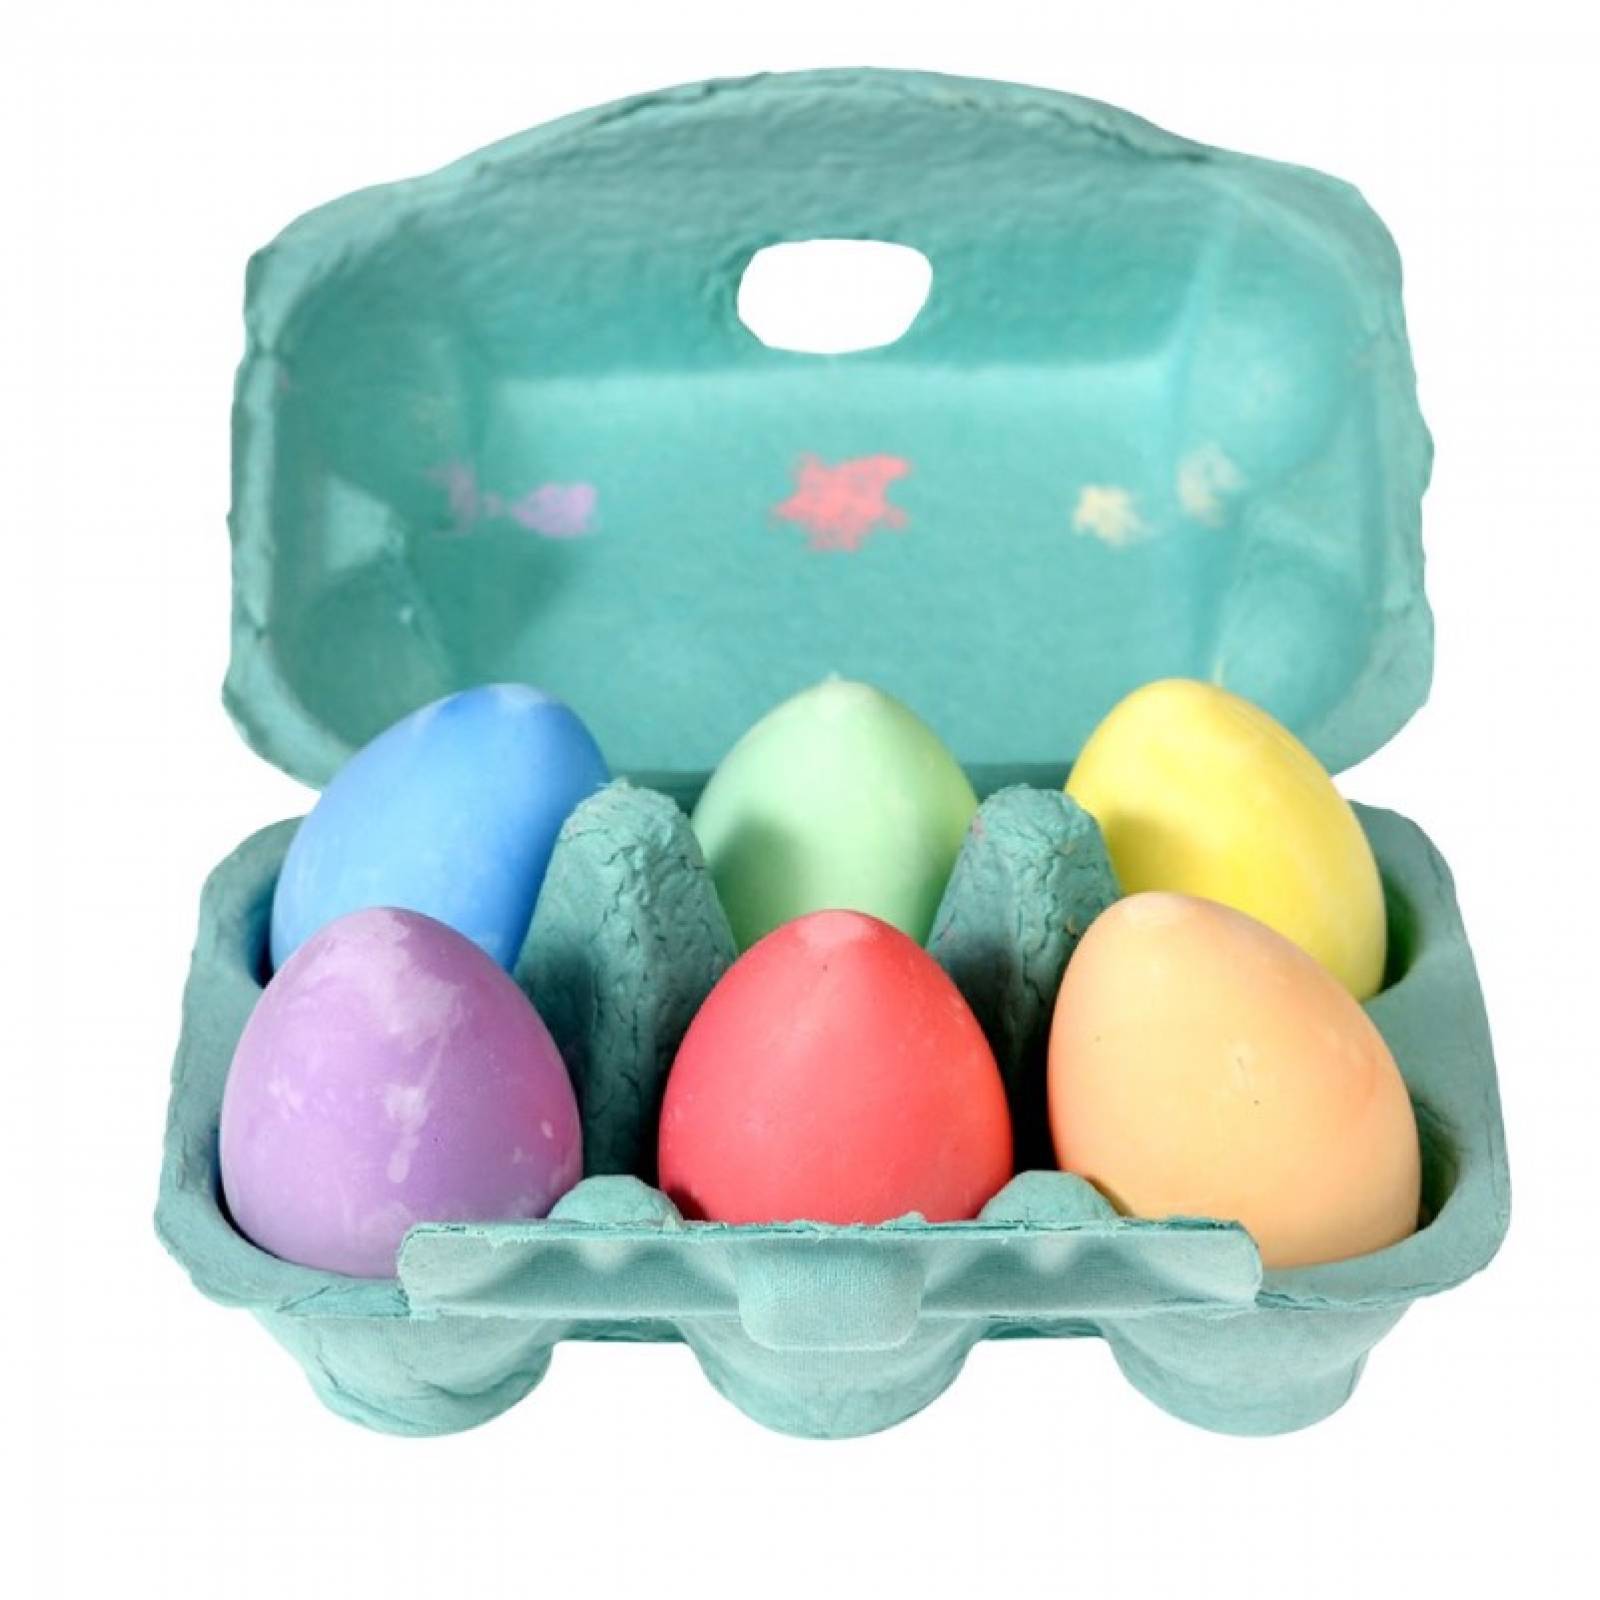 Box Of Coloured Chalk Eggs